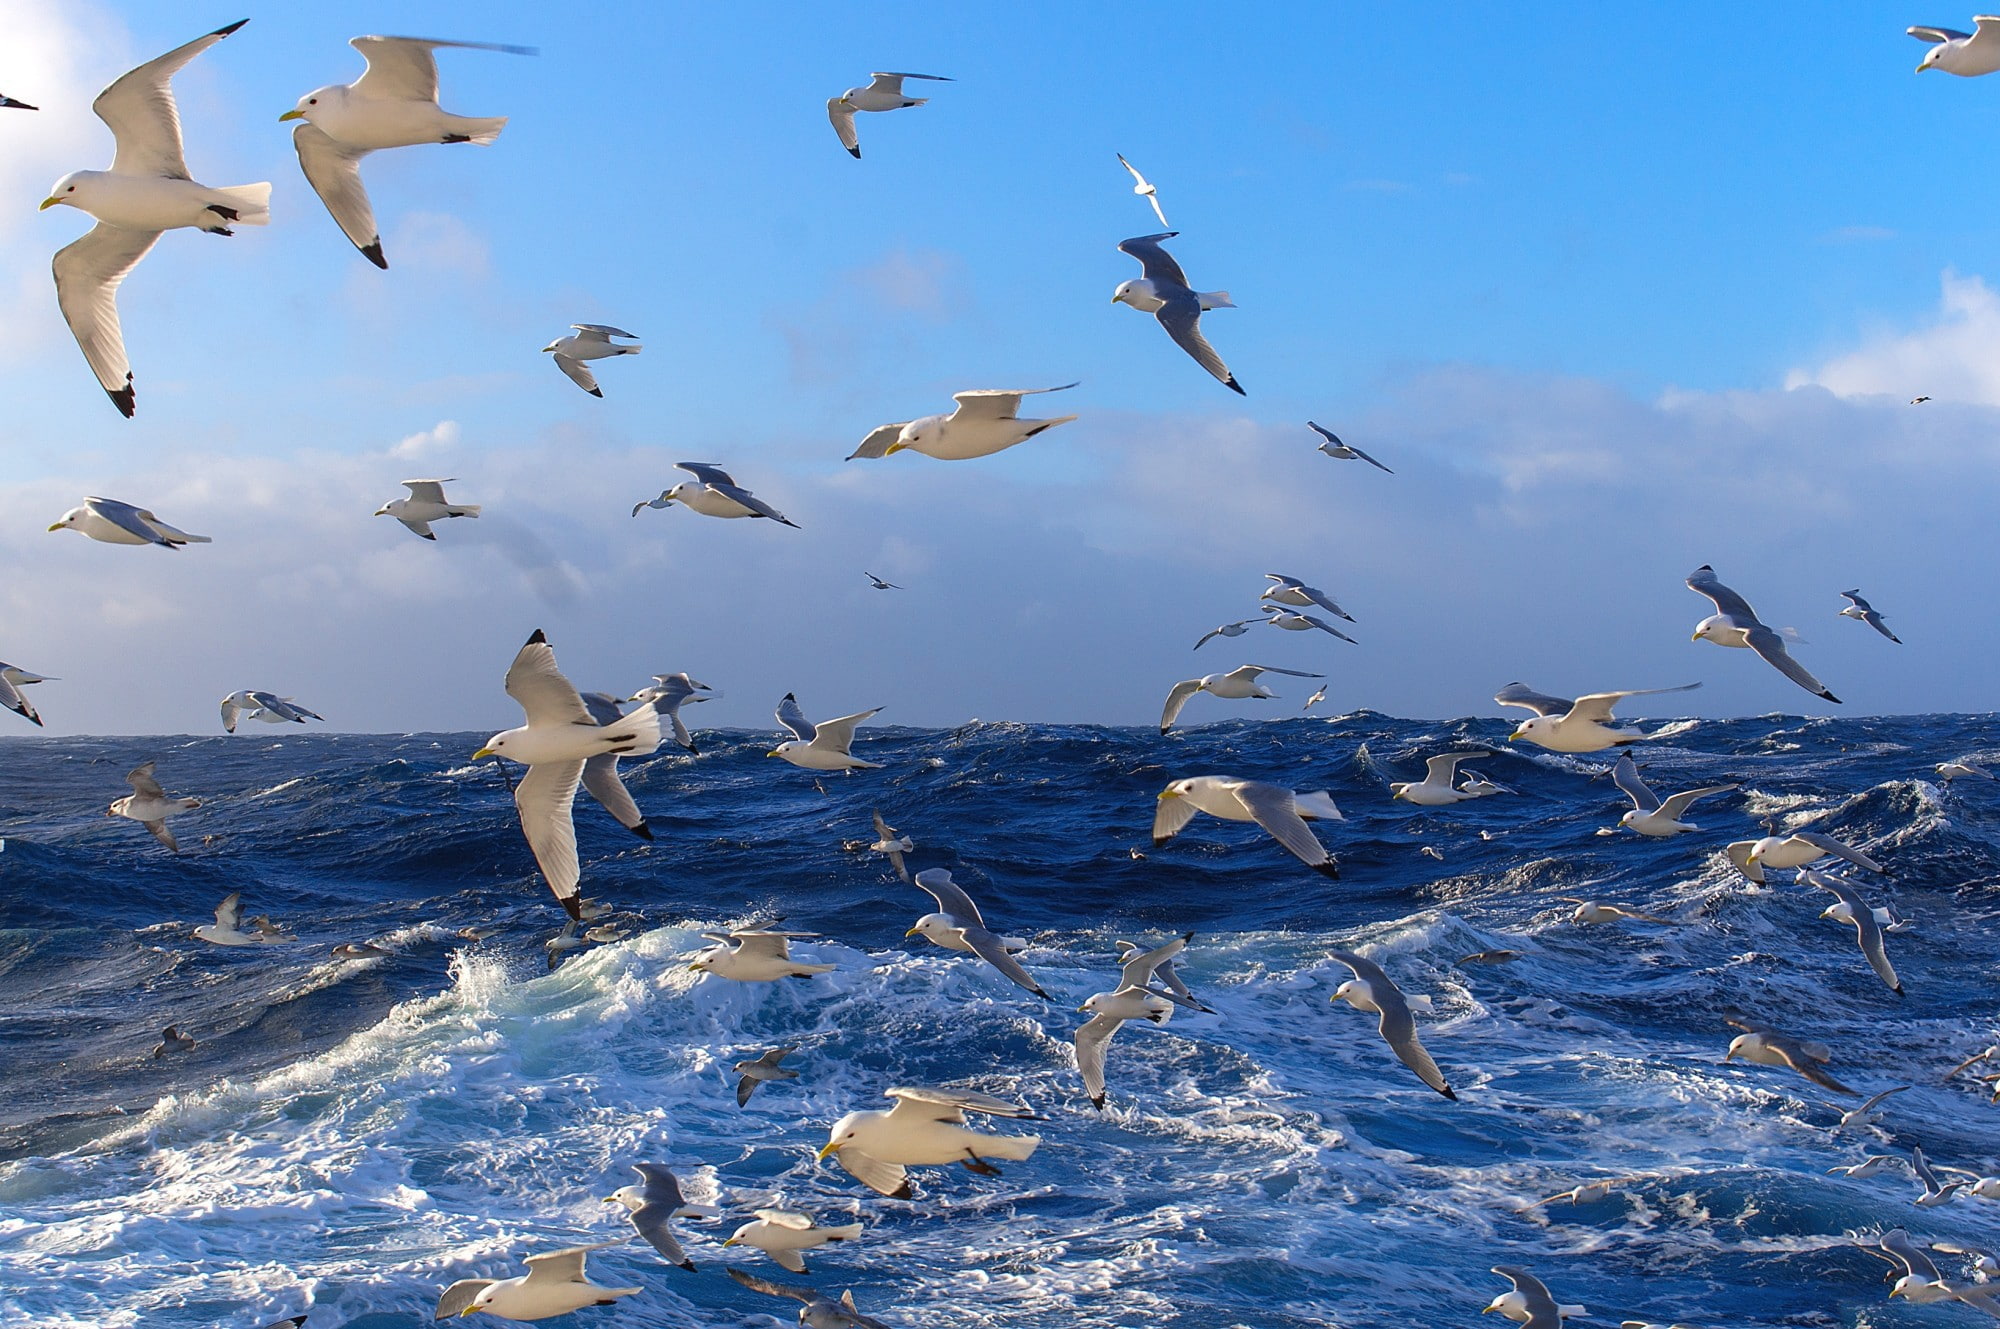 Flock of birds, seagulls, Ocean, water, waves, surface, sky, distance